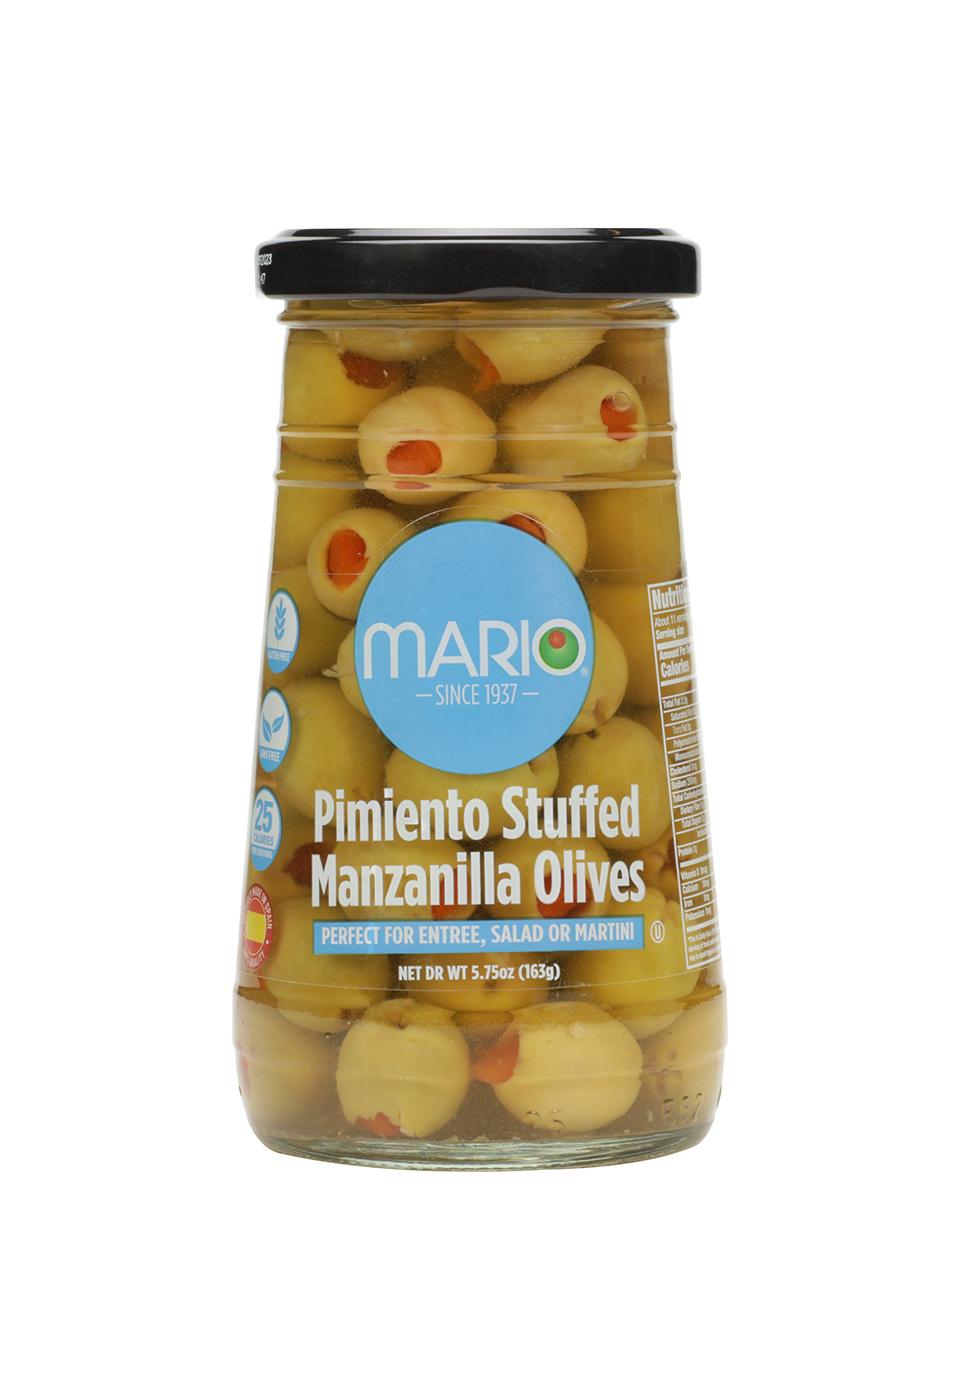 Mario Pimiento Stuffed Manzanilla Olives; image 1 of 2